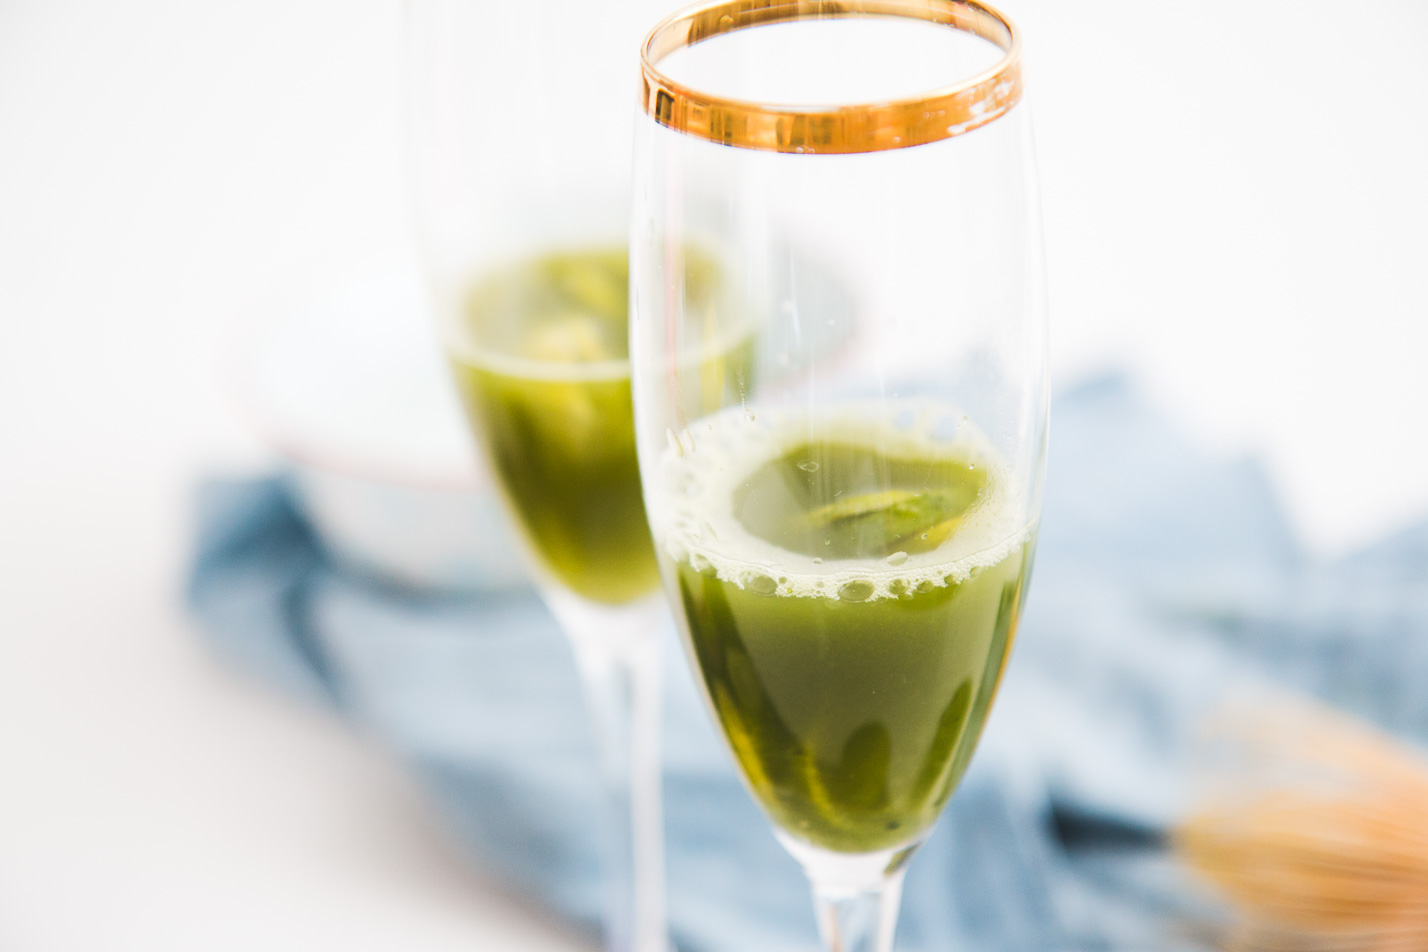 Matcharinha Nonalcoholic Drink with Matcha Green Tea | Love Daily Dose